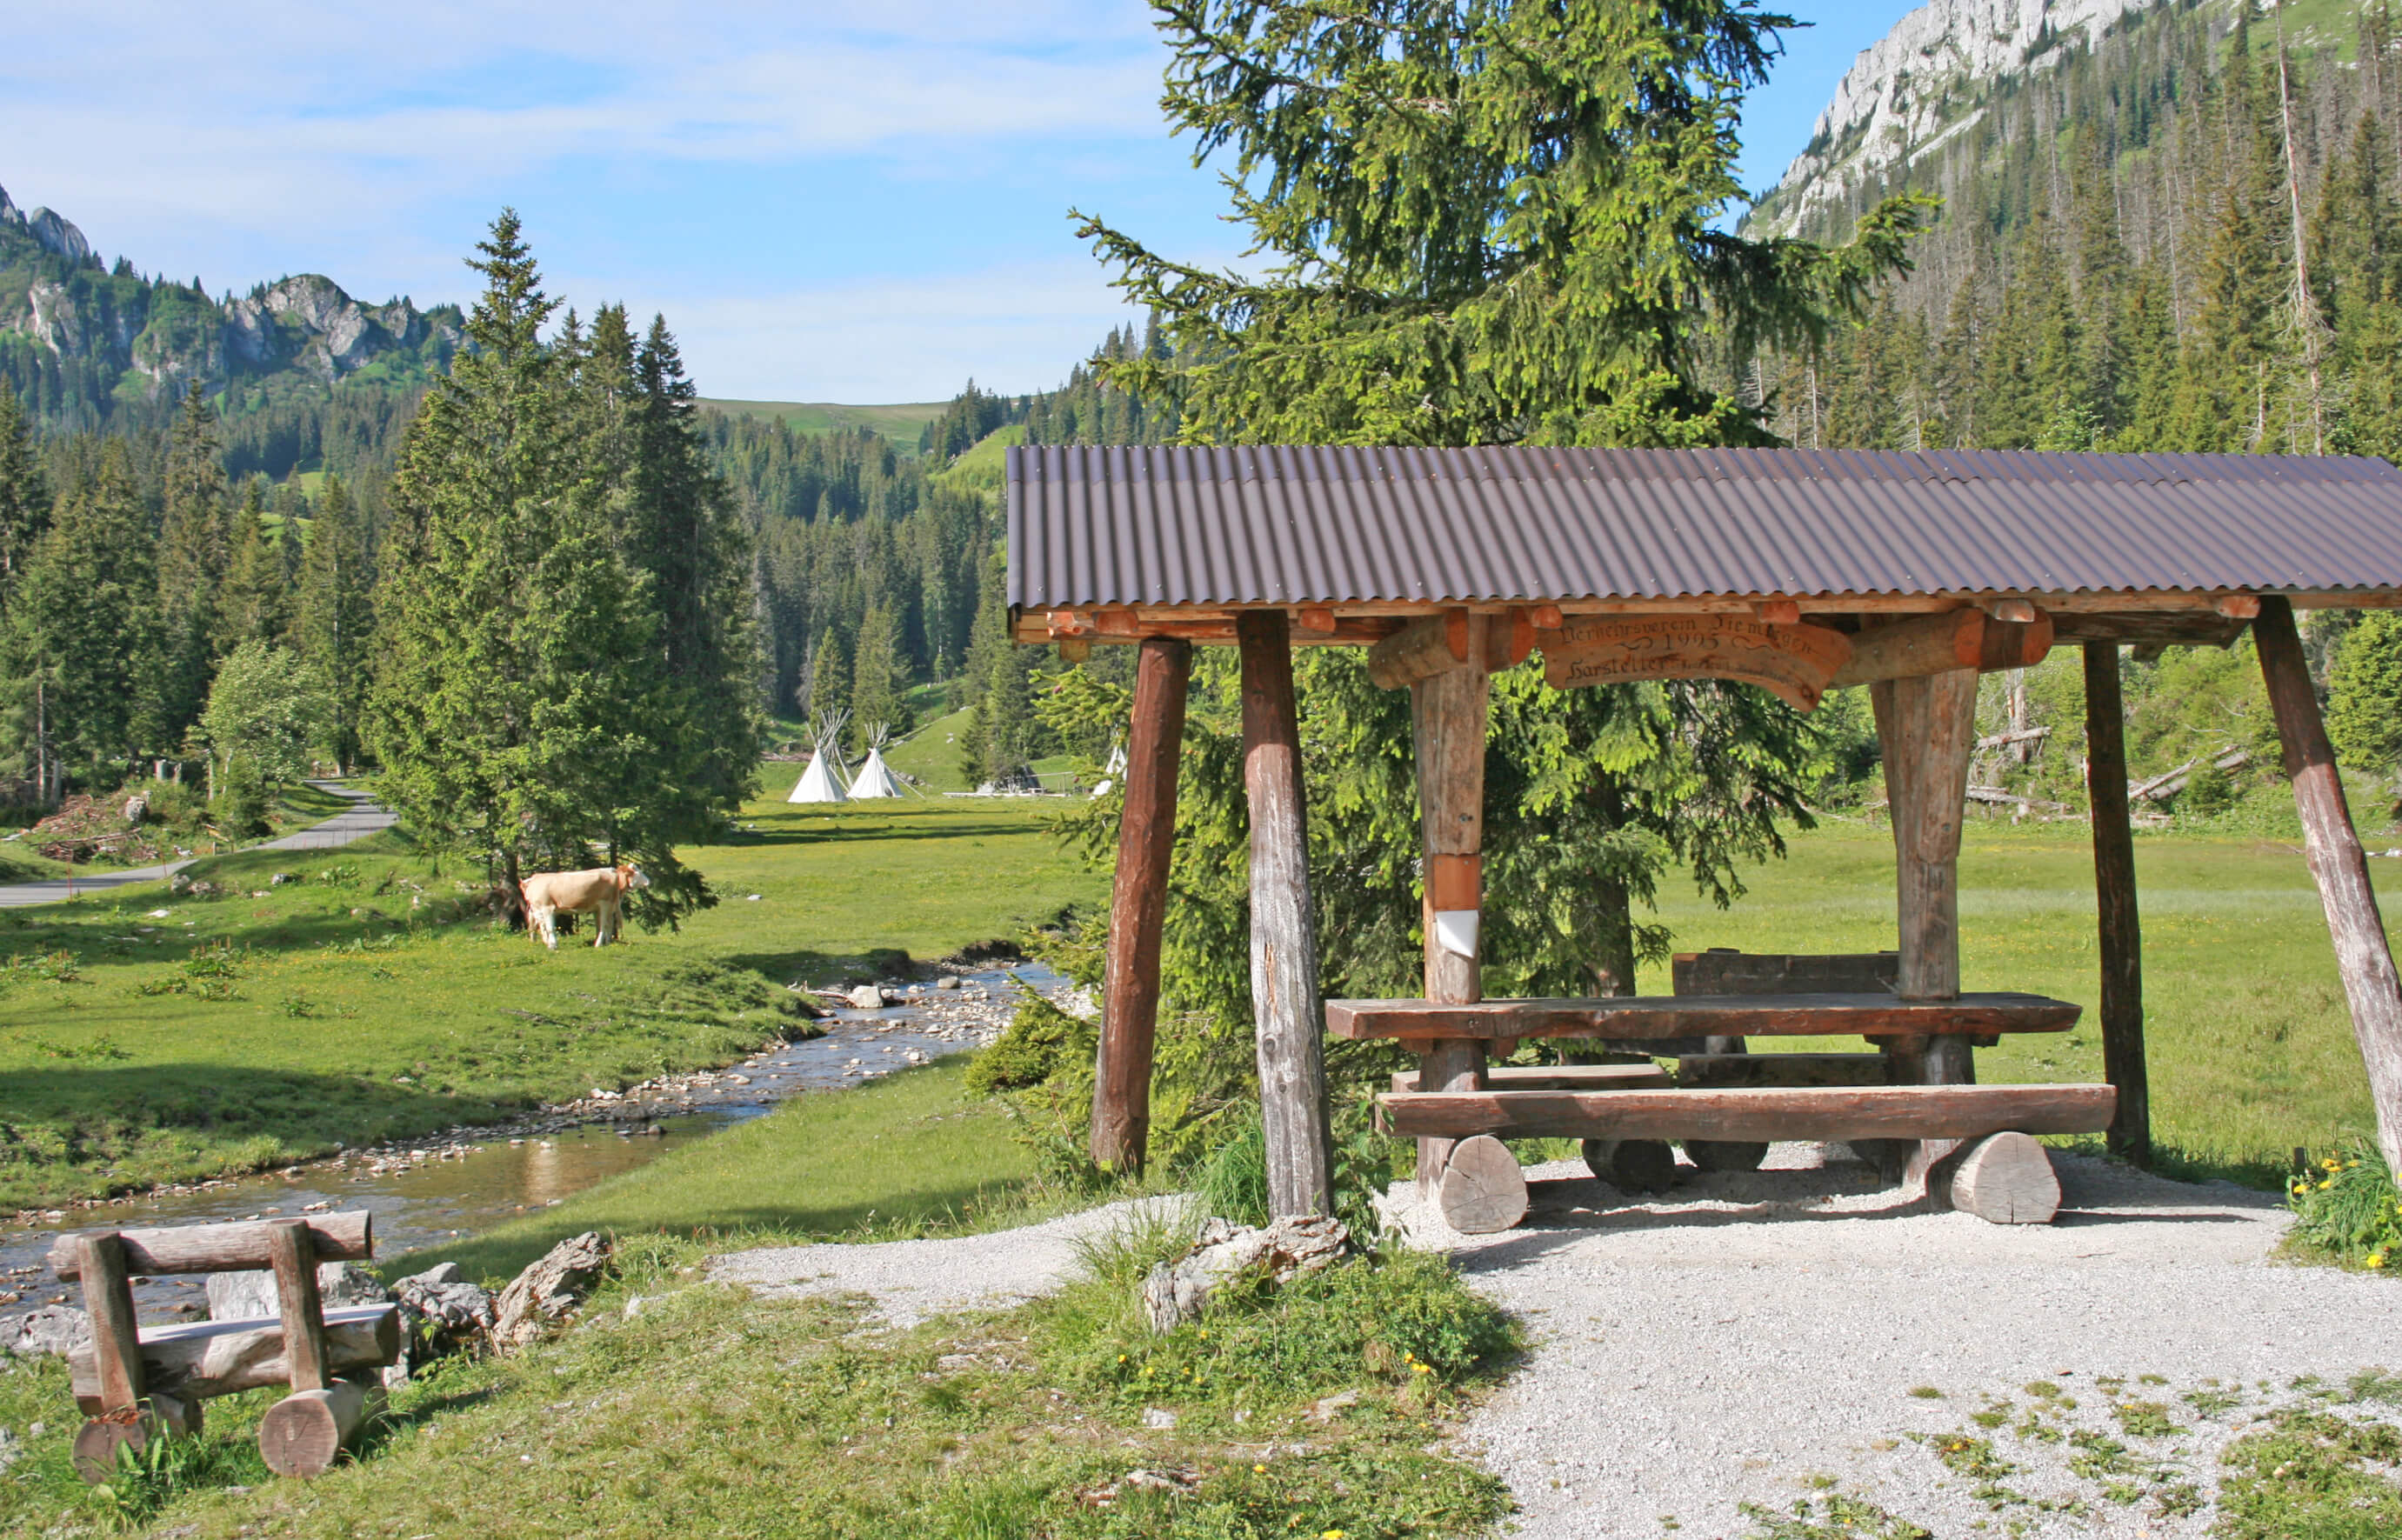 Menigboden fireplace in the wild and romantic alpine region